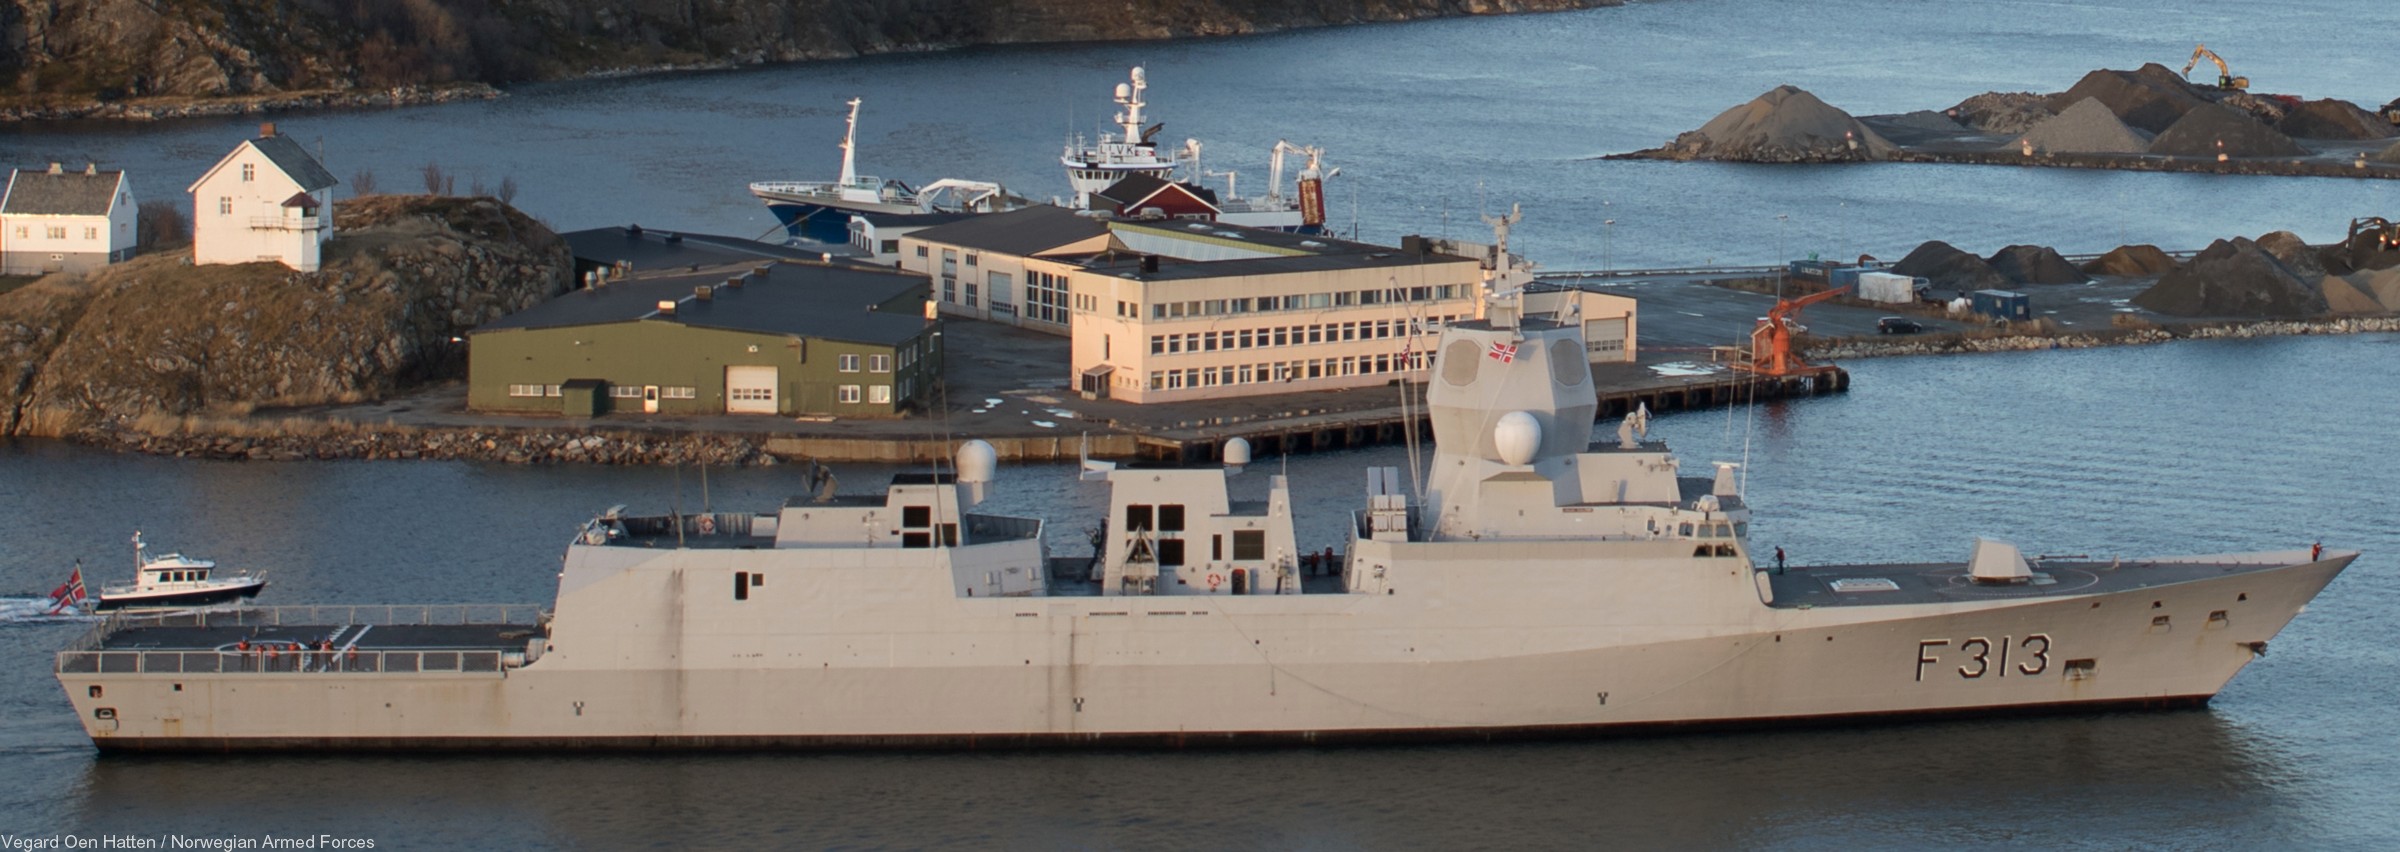 f-313 helge ingstad hnoms knm nansen class frigate royal norwegian navy 28